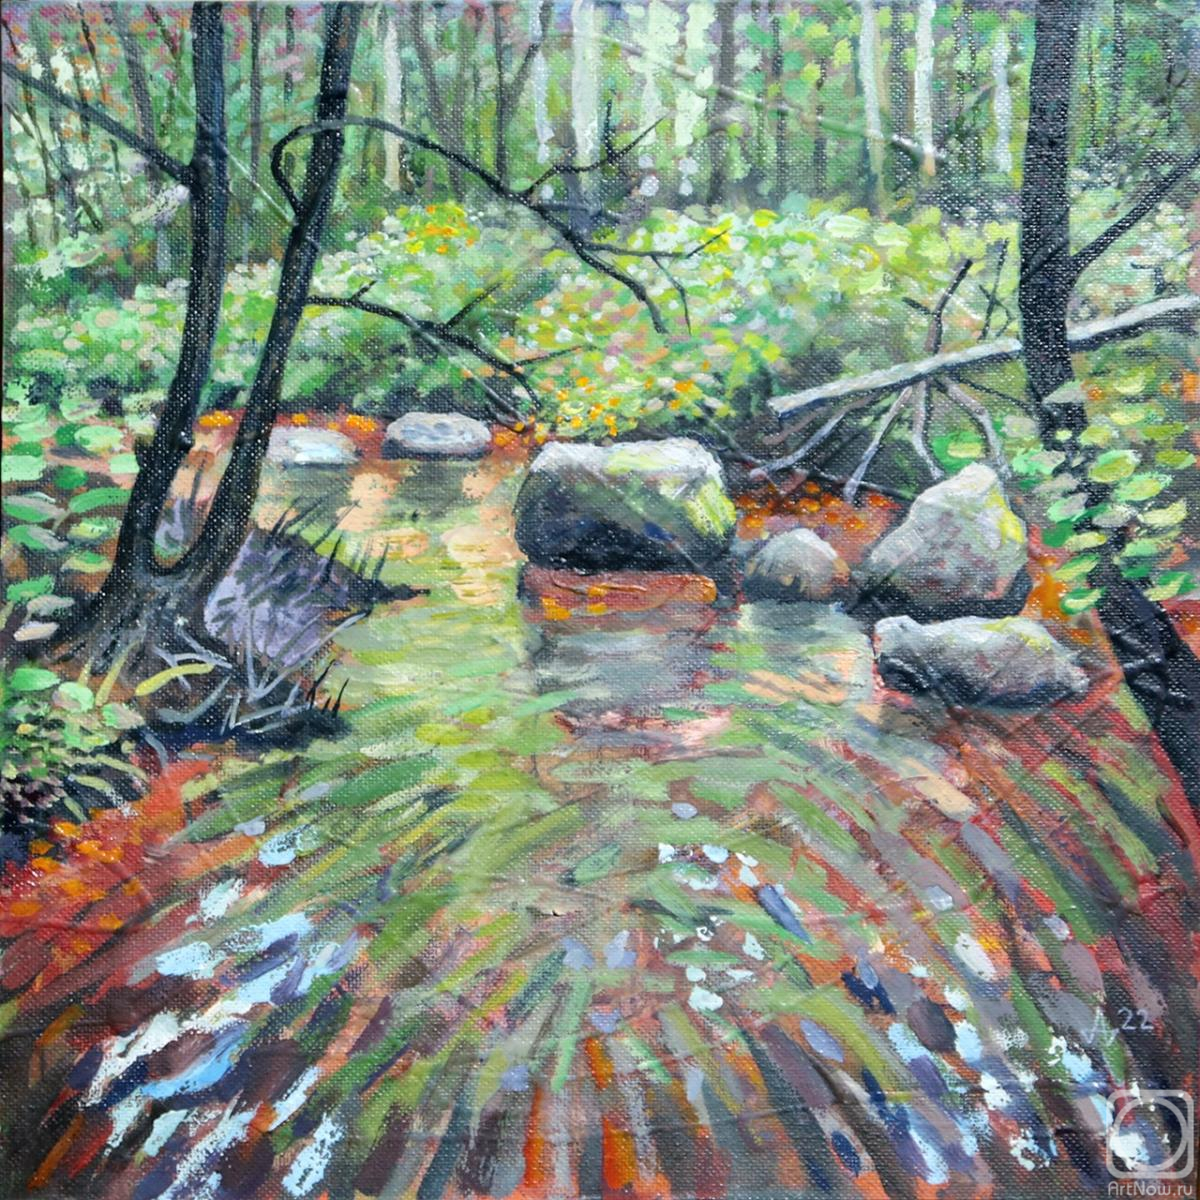 Akimov Dmitry. Toshiki. A stream in the forest